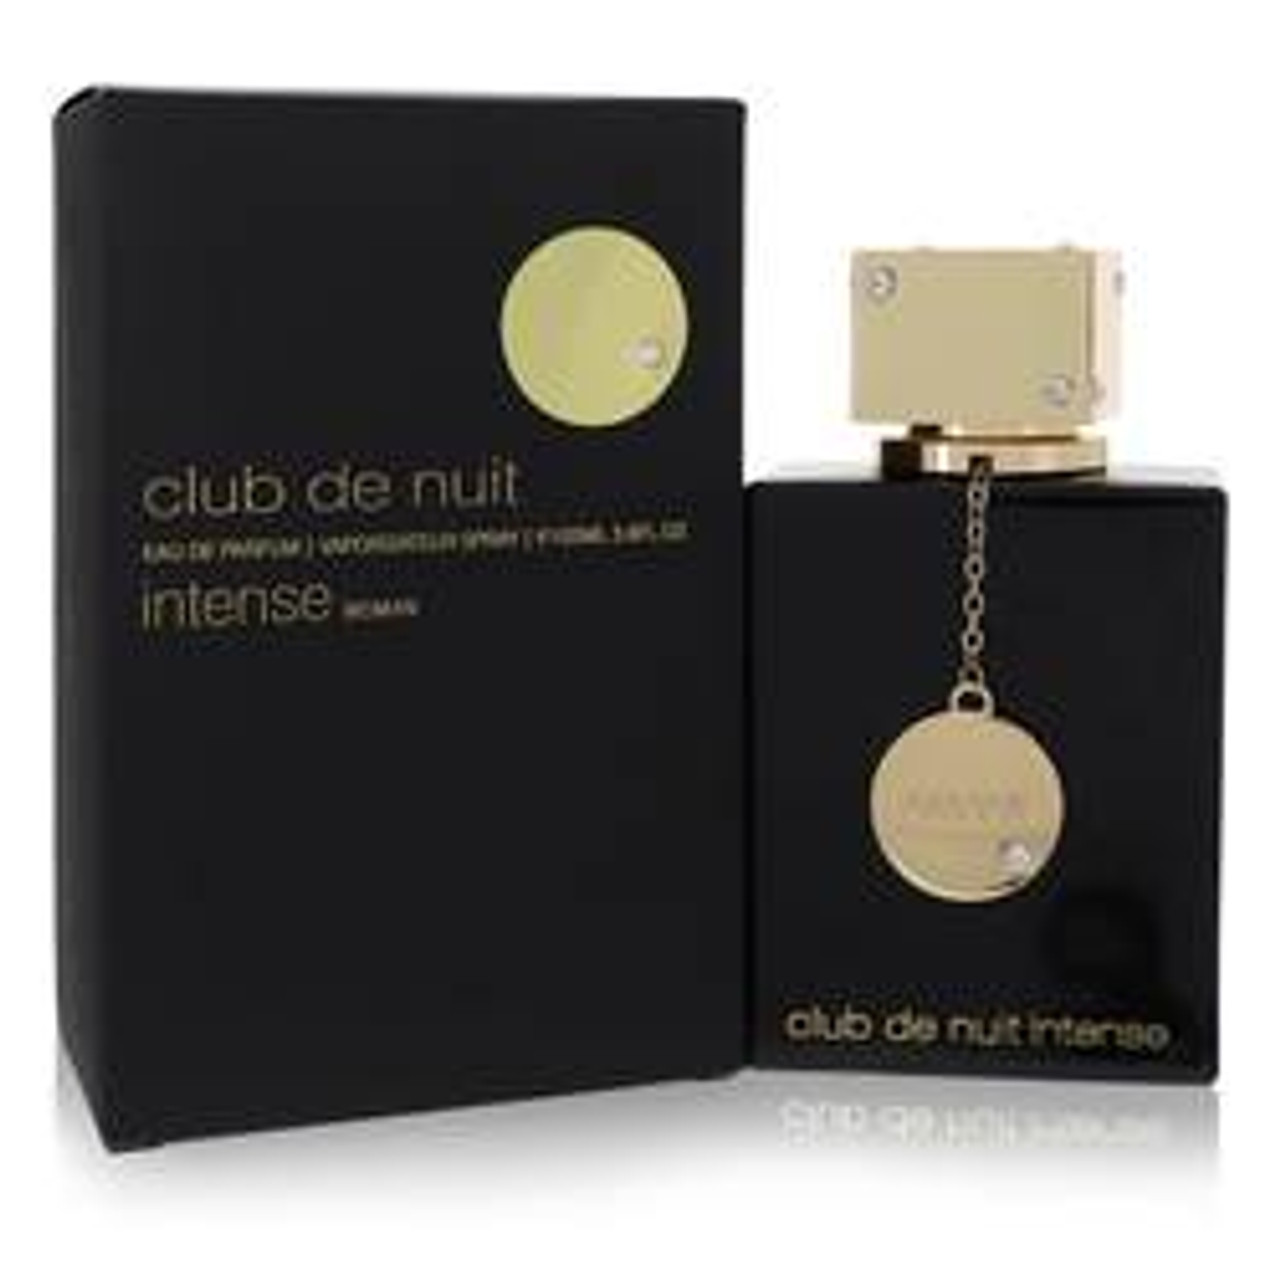 Club De Nuit Intense Perfume By Armaf Eau De Parfum Spray 3.6 oz for Women - [From 79.50 - Choose pk Qty ] - *Ships from Miami